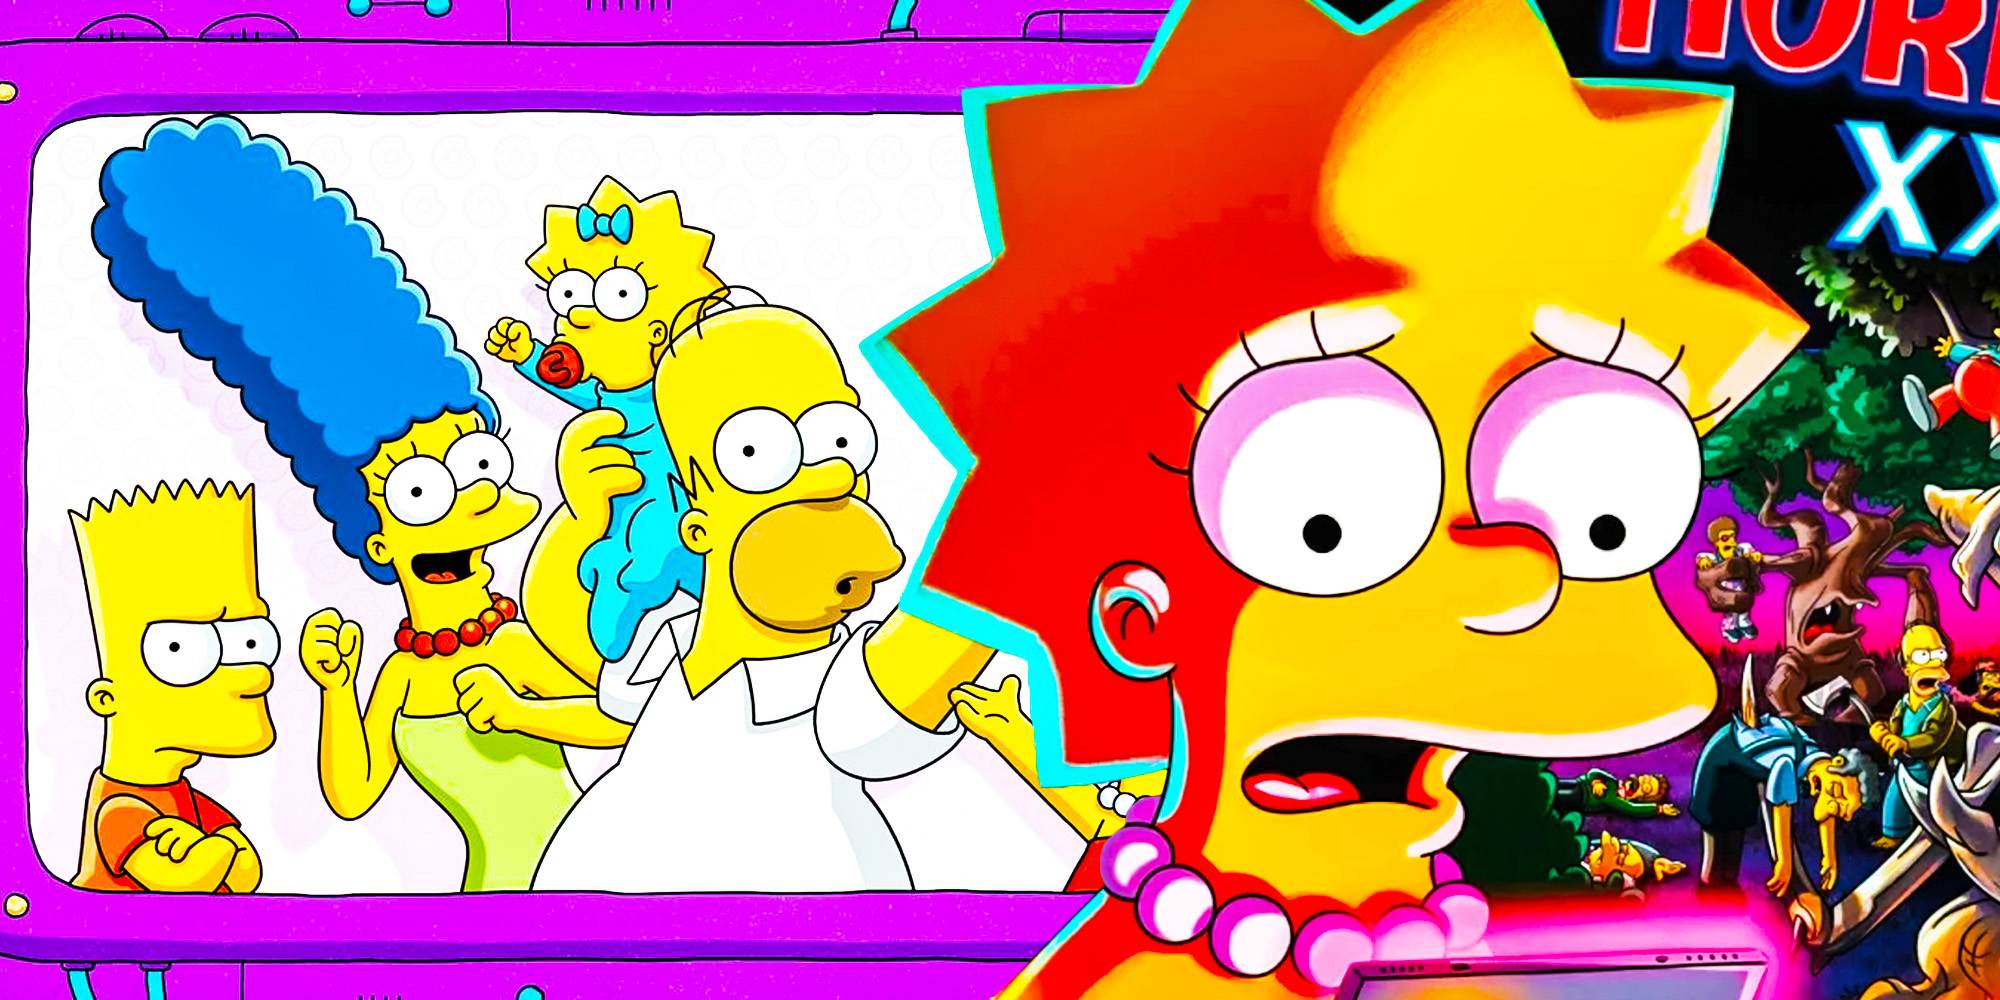 Simpsons season 34 treehouse of horror